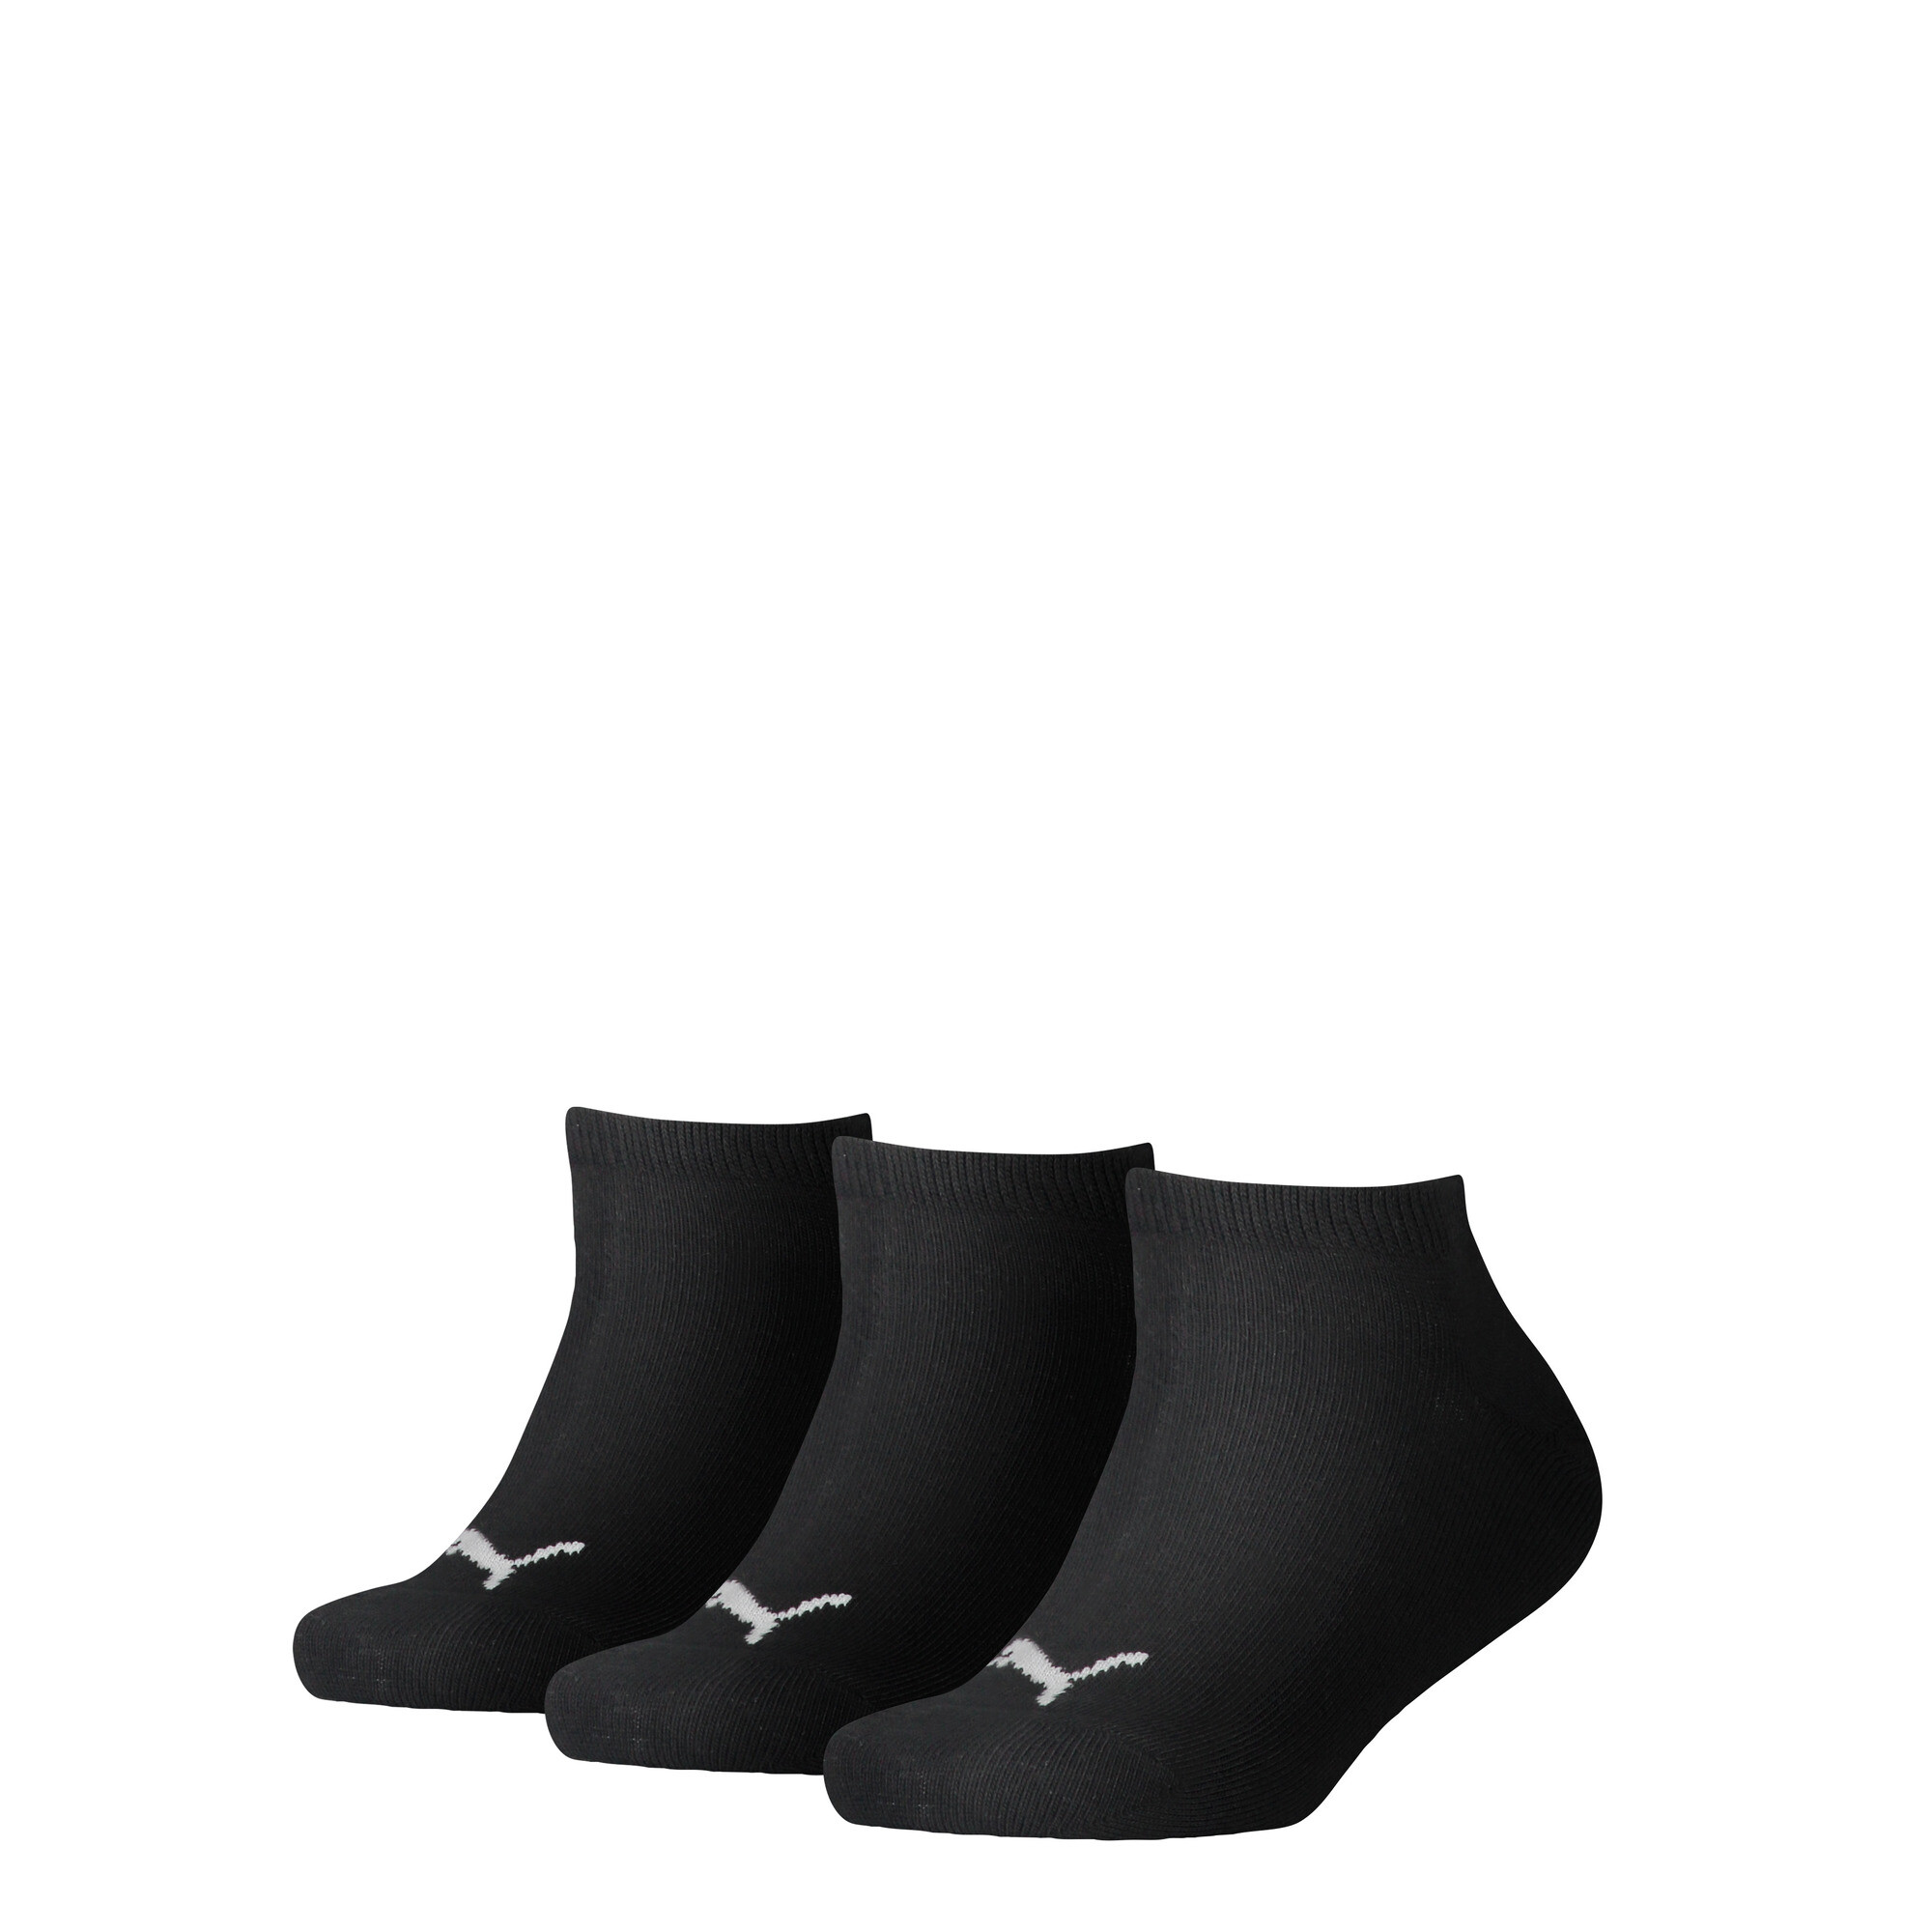 Kids' PUMA Invisible Socks 3 Pack In Black, Size 31-34